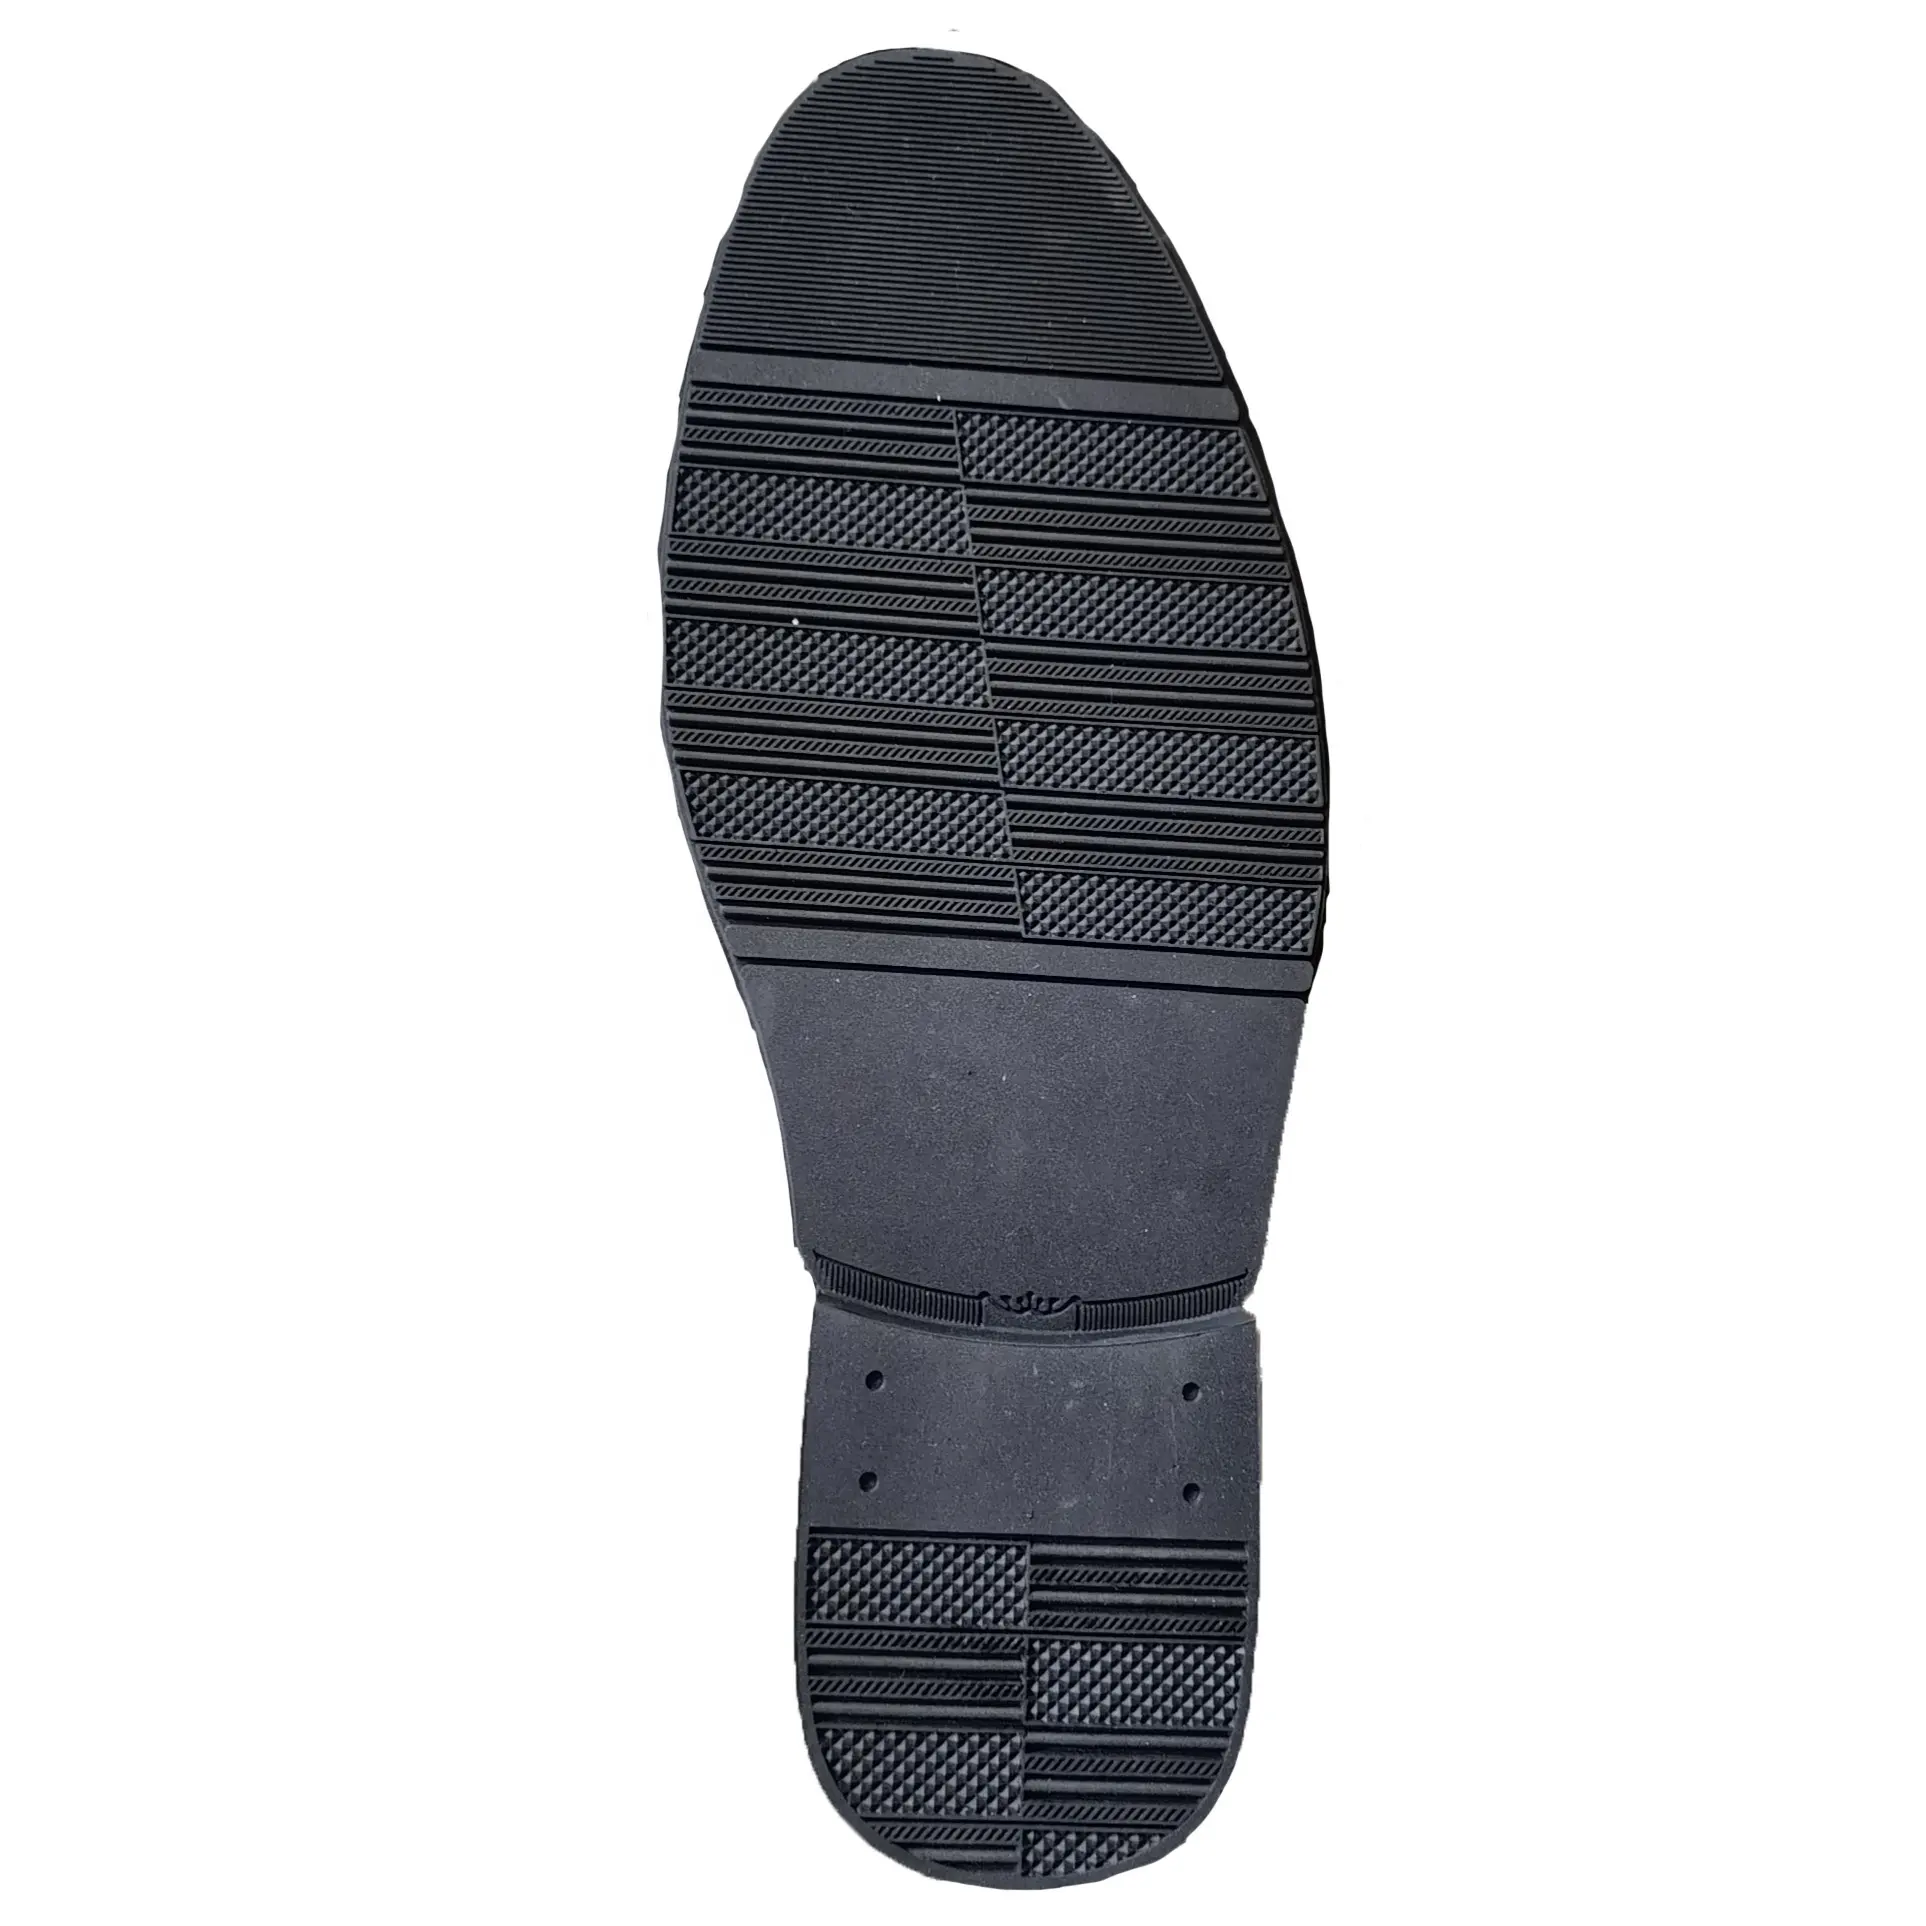 TianMin Shoe Sole Factory Custom Sale Men's Rubber Business Pointed Shoe Sole